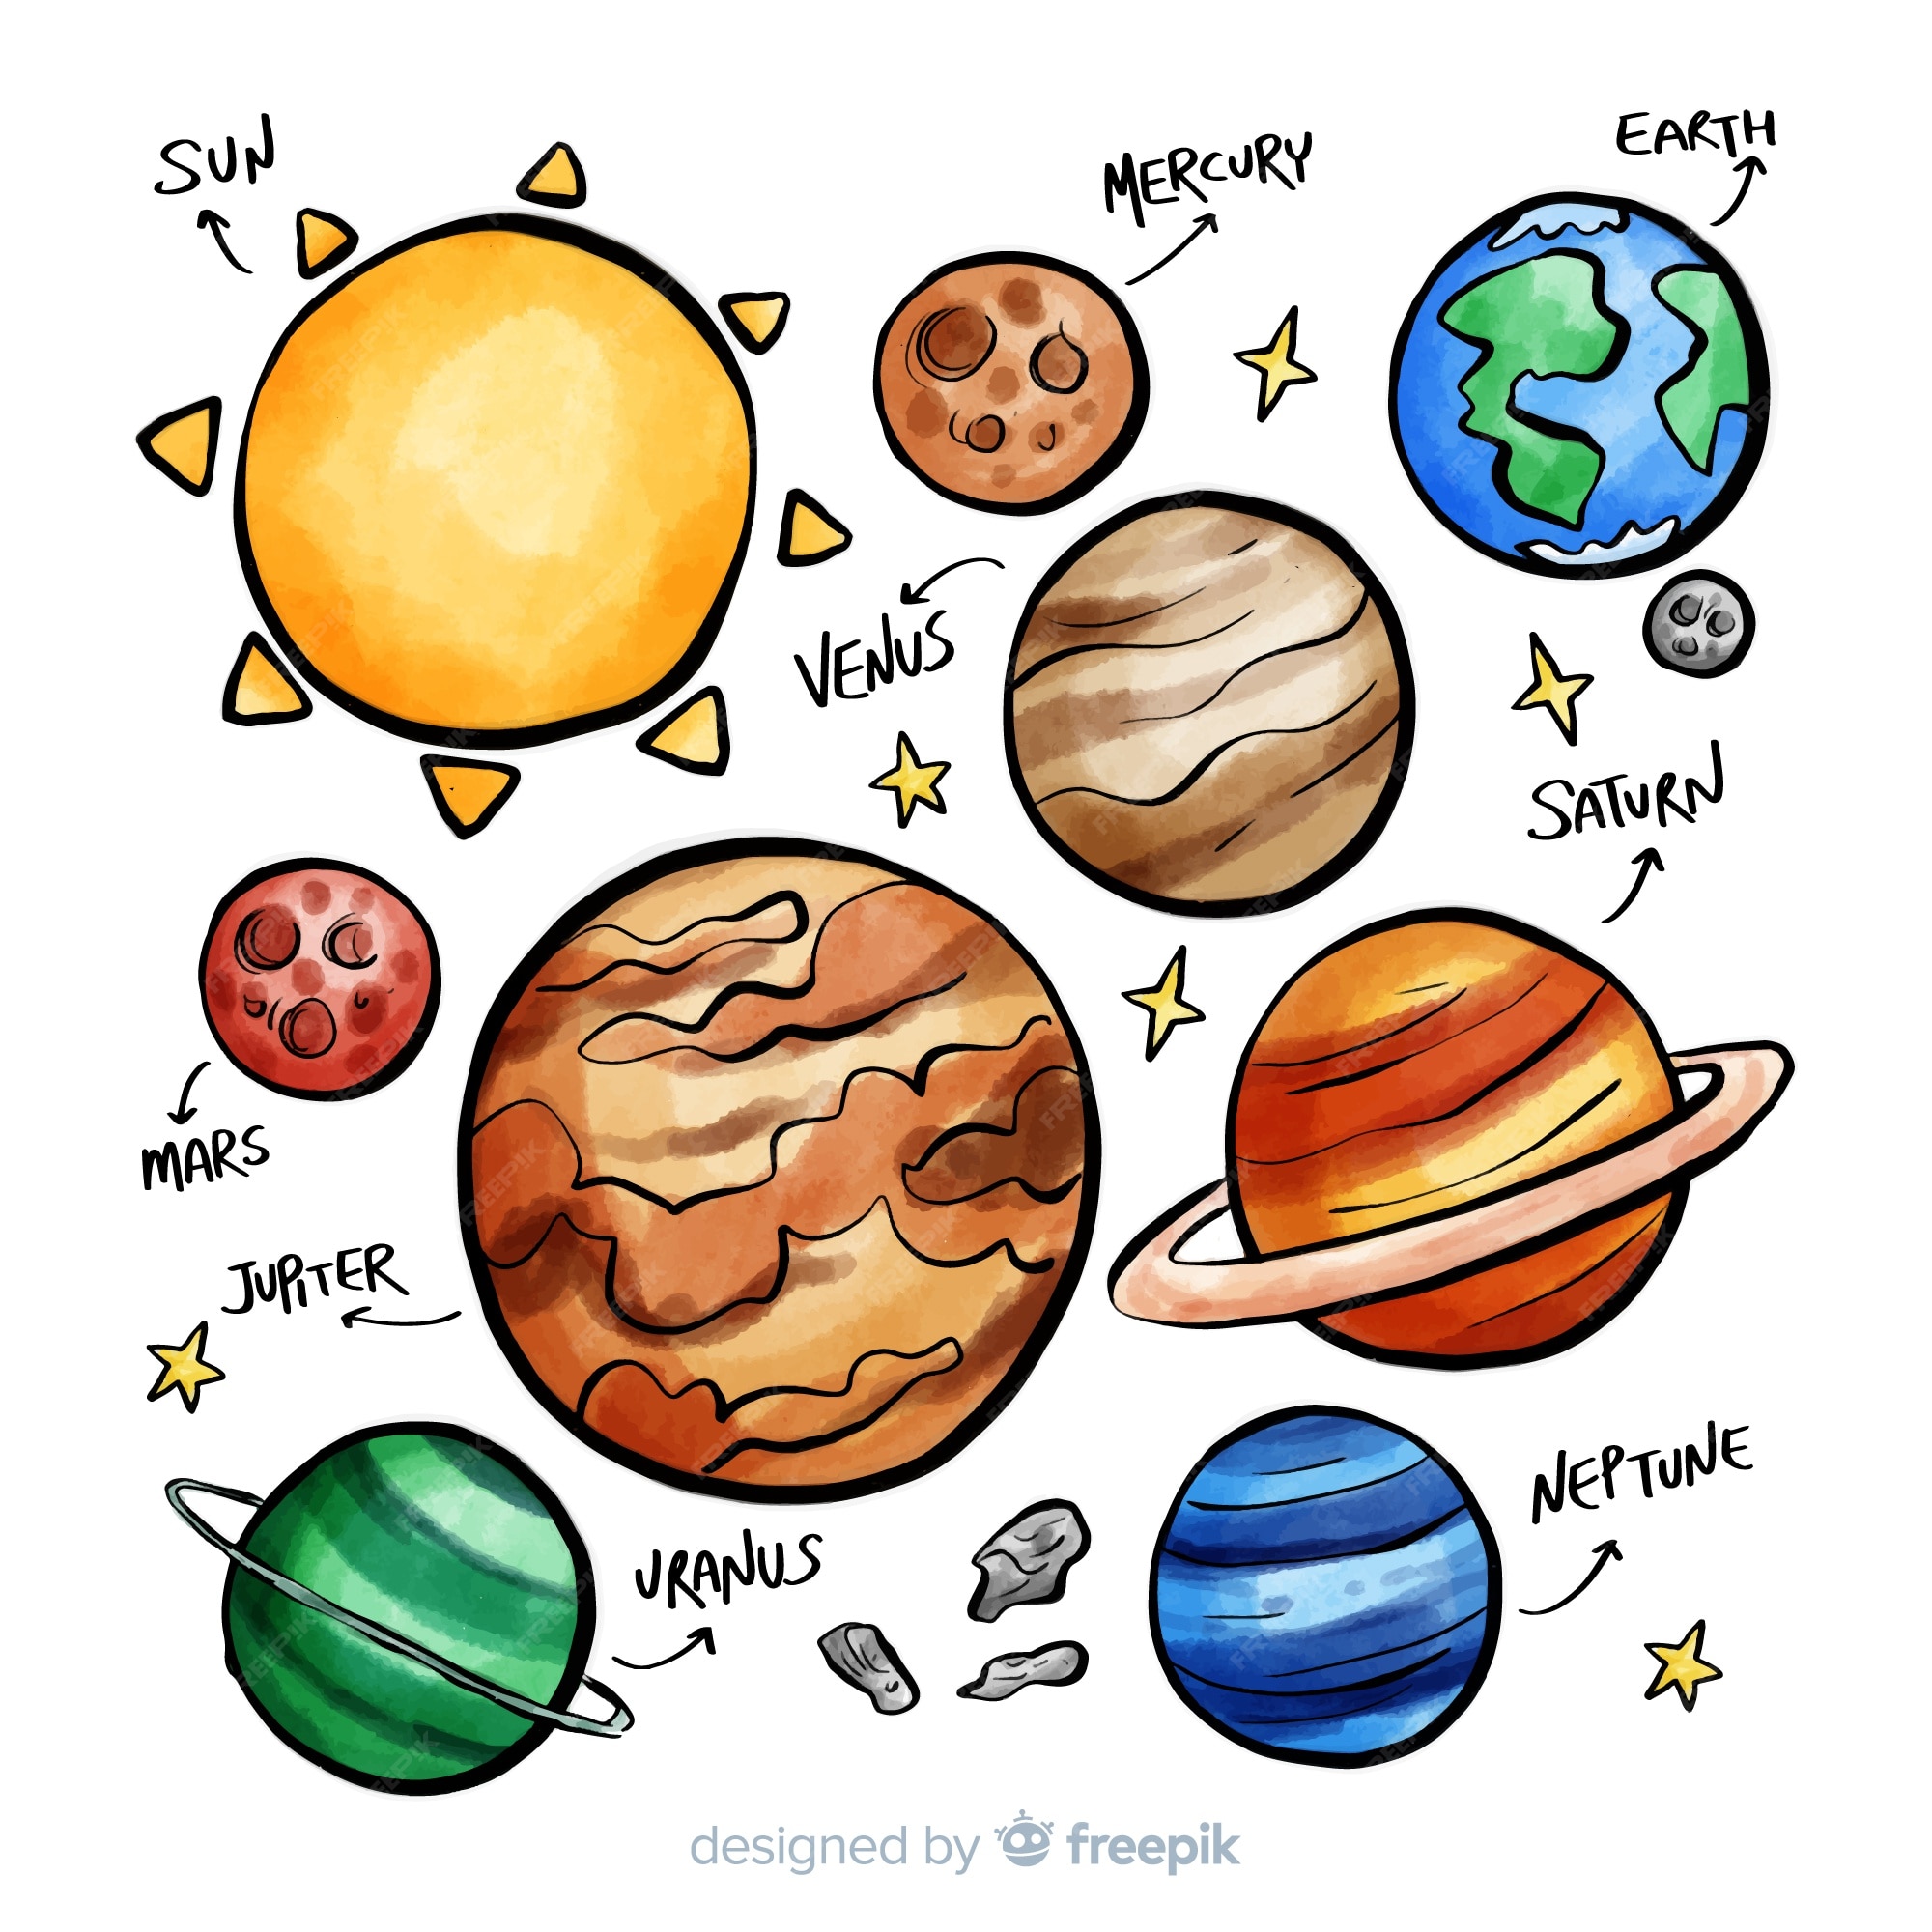 Imágenes de Planetas Dibujo - Descarga gratuita en Freepik